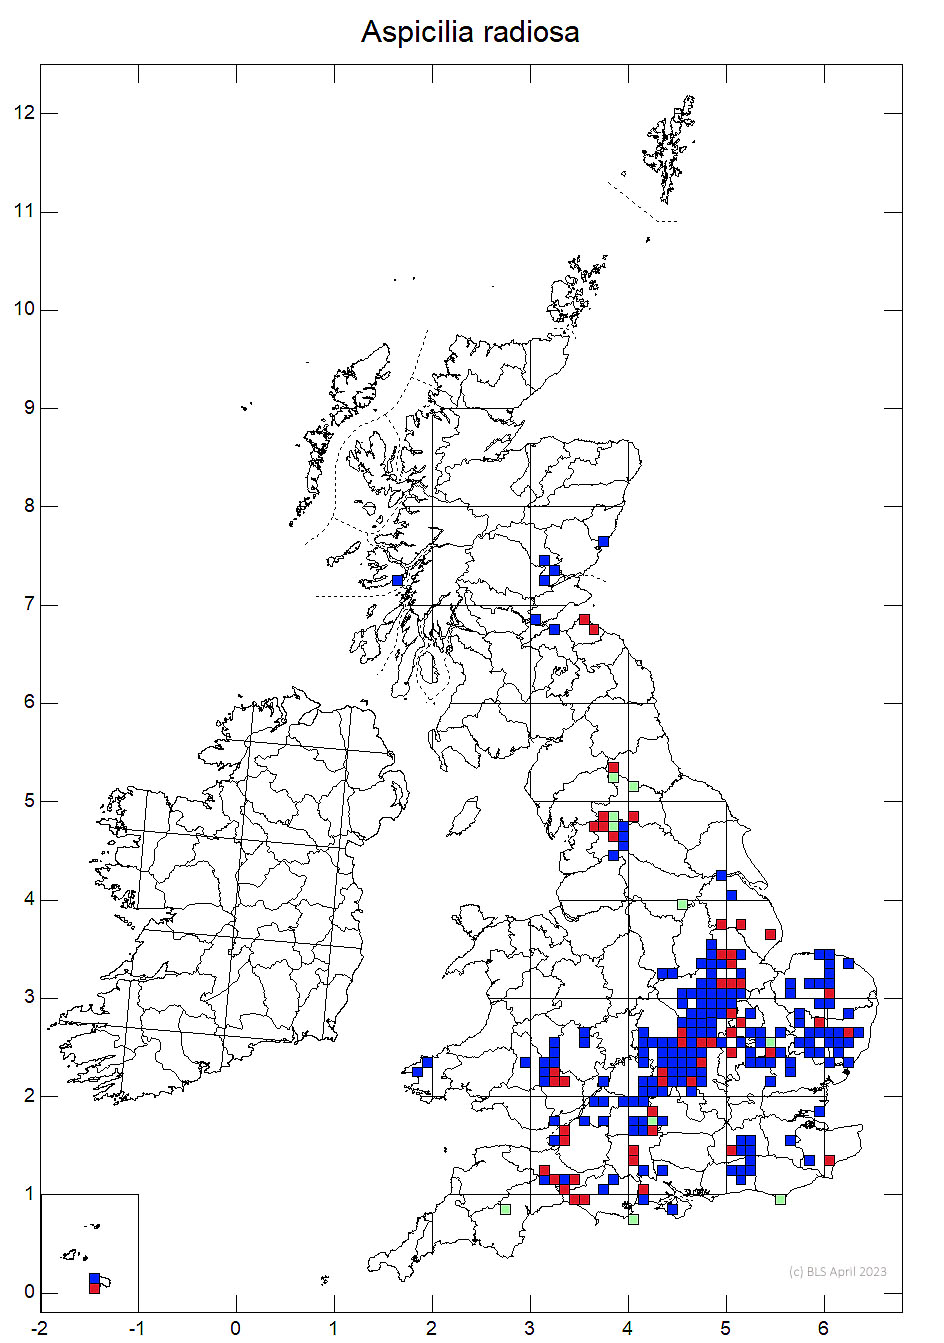 Aspicilia radiosa 10km sq distribution map